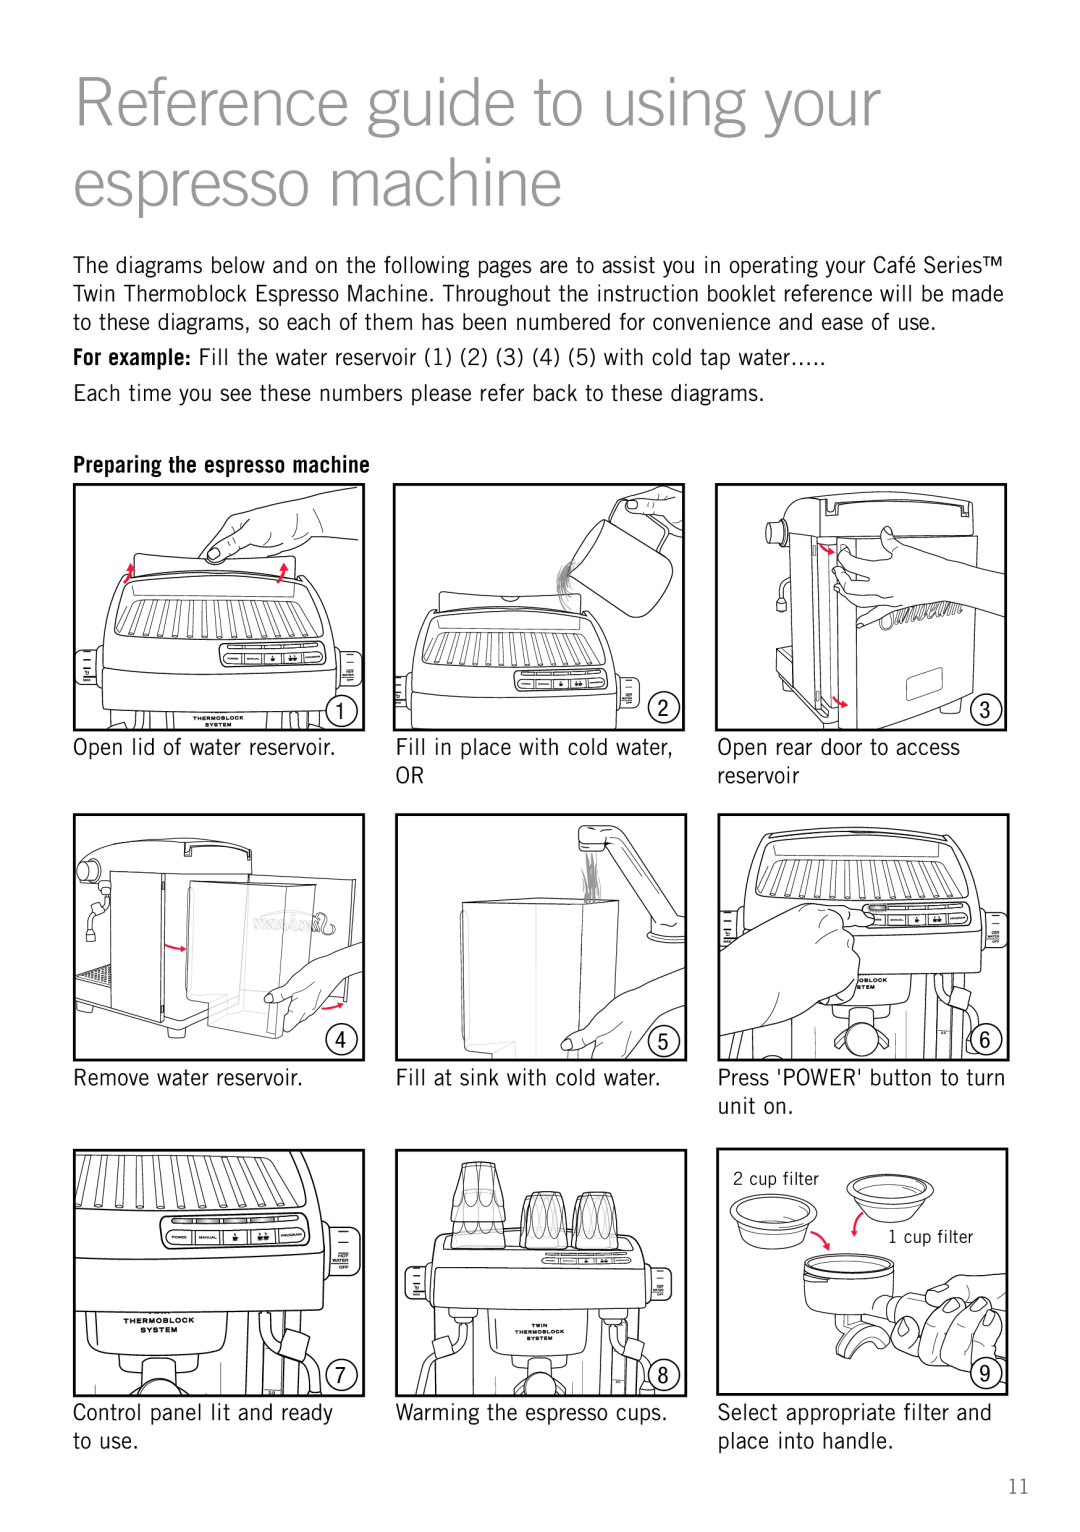 Sunbeam EM8900 manual Reference guide to using your espresso machine, Preparing the espresso machine 